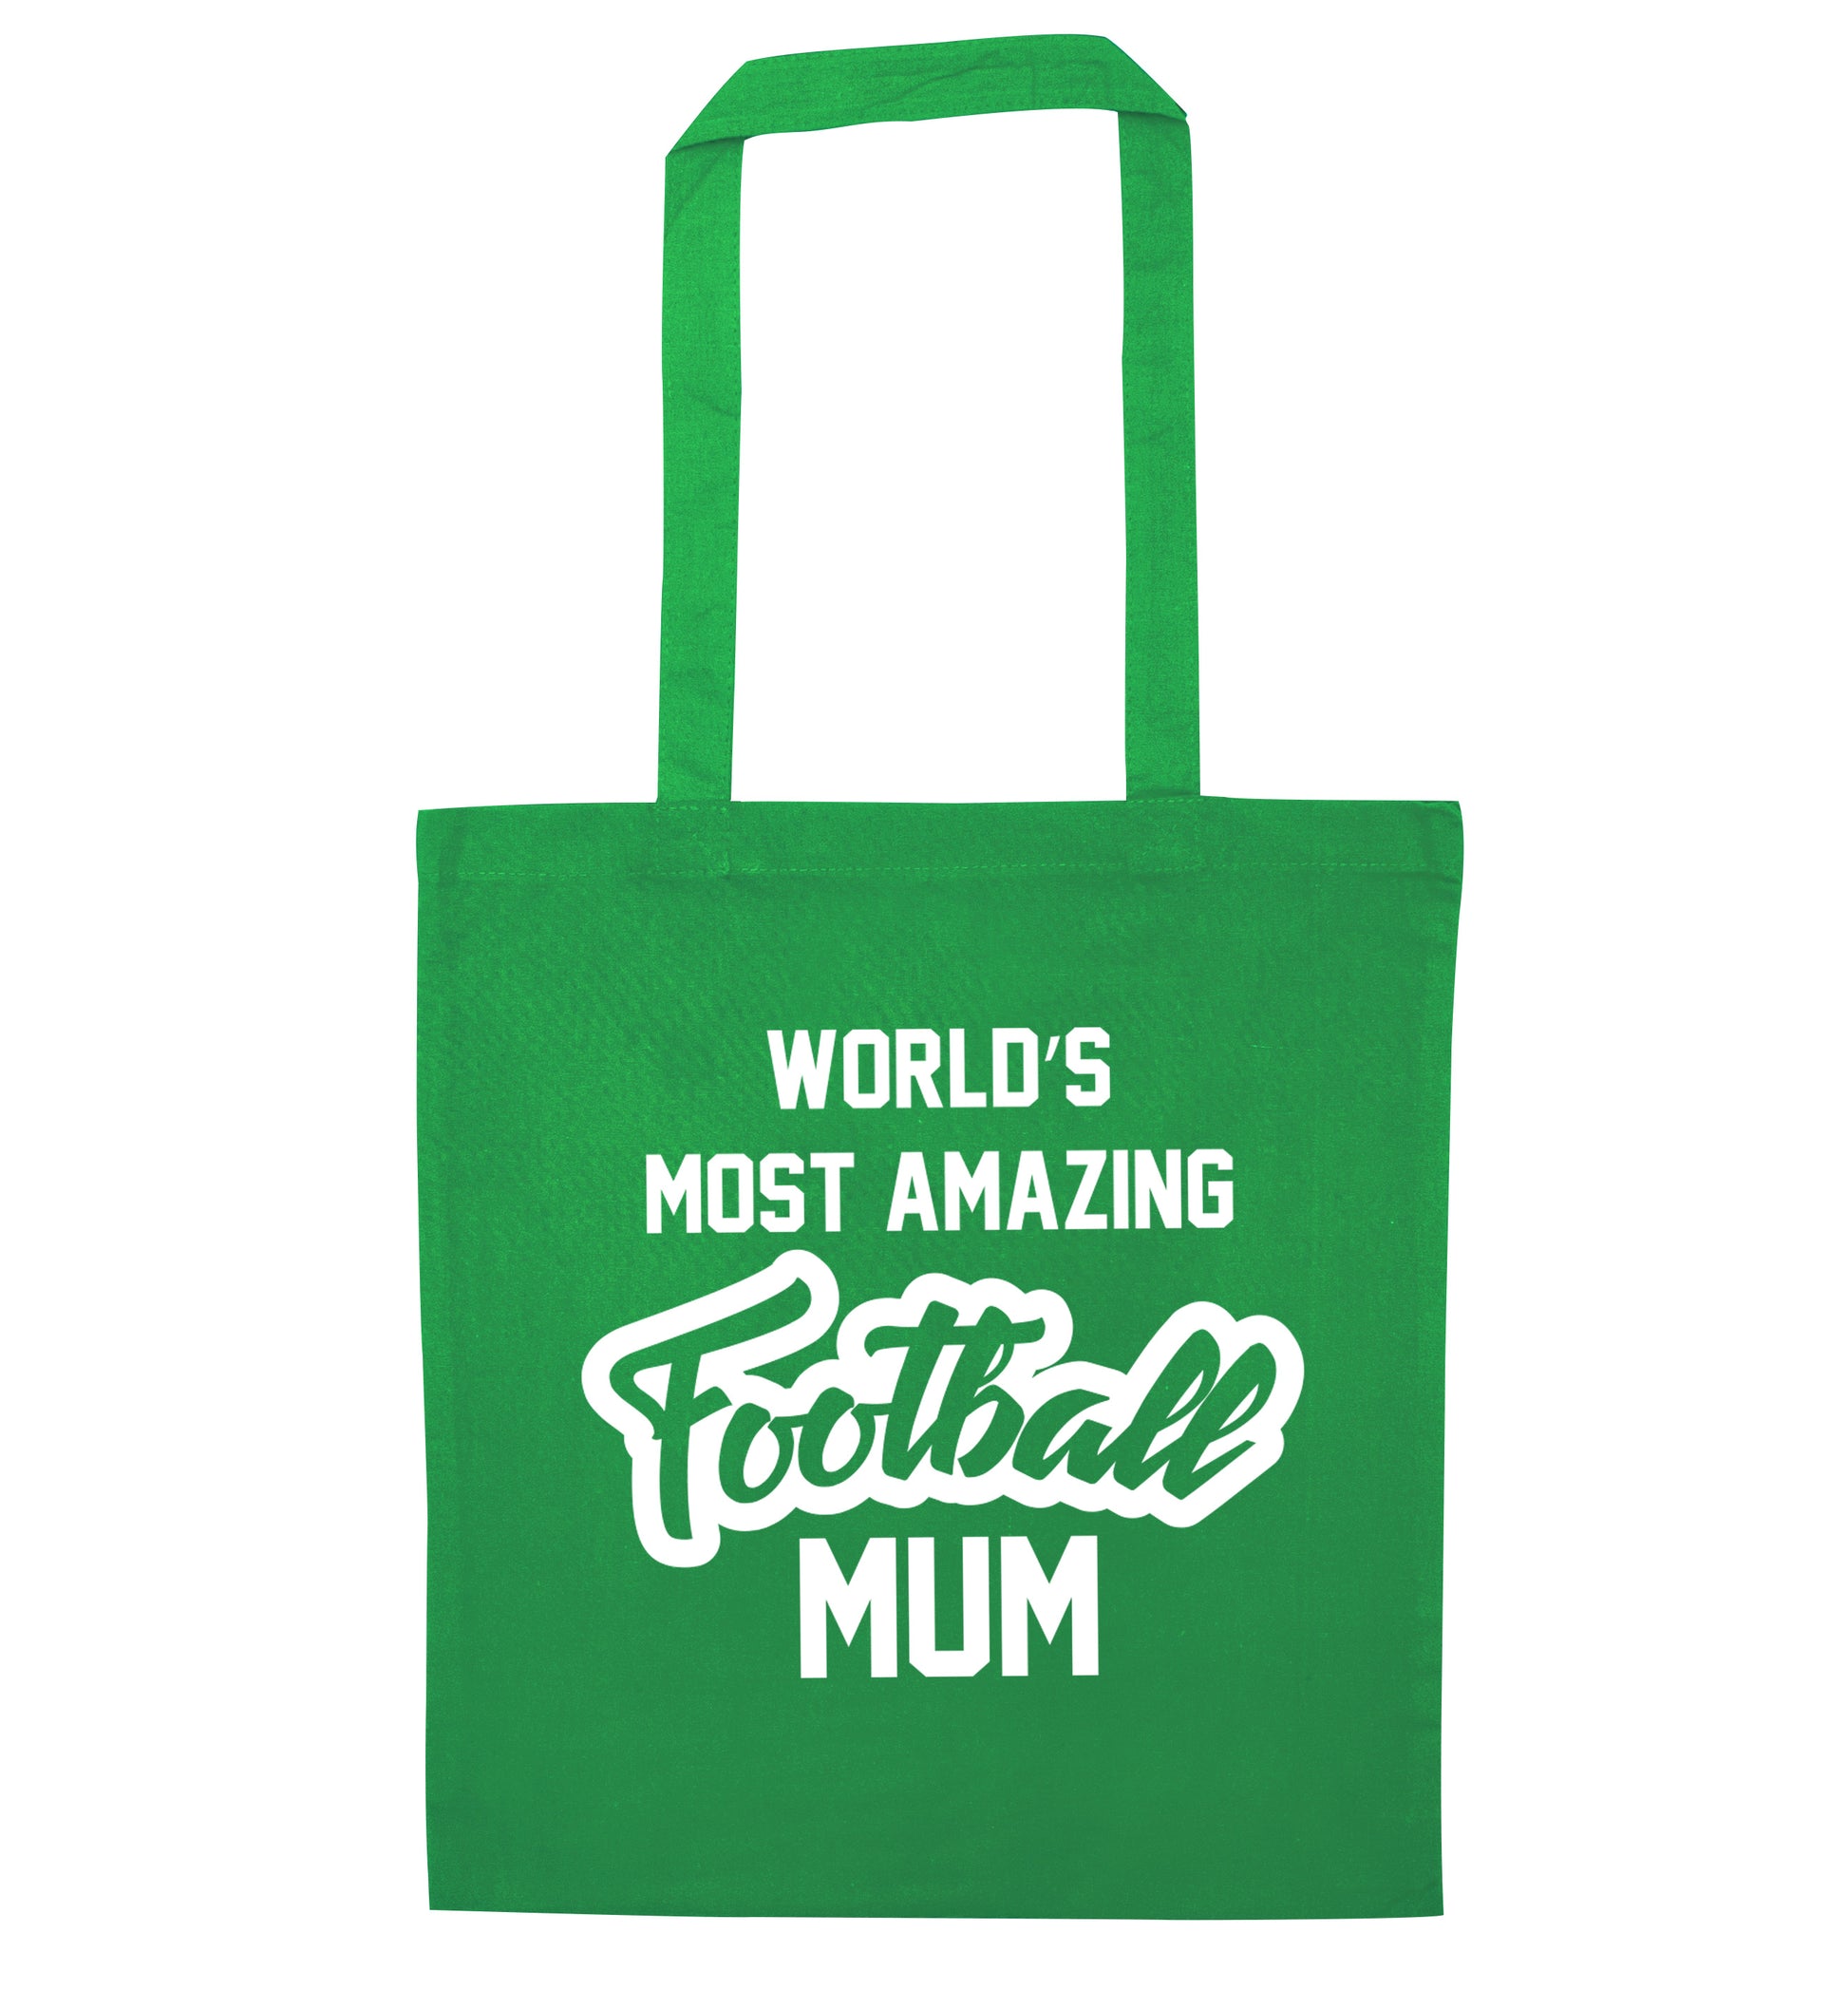 Worlds most amazing football mum green tote bag